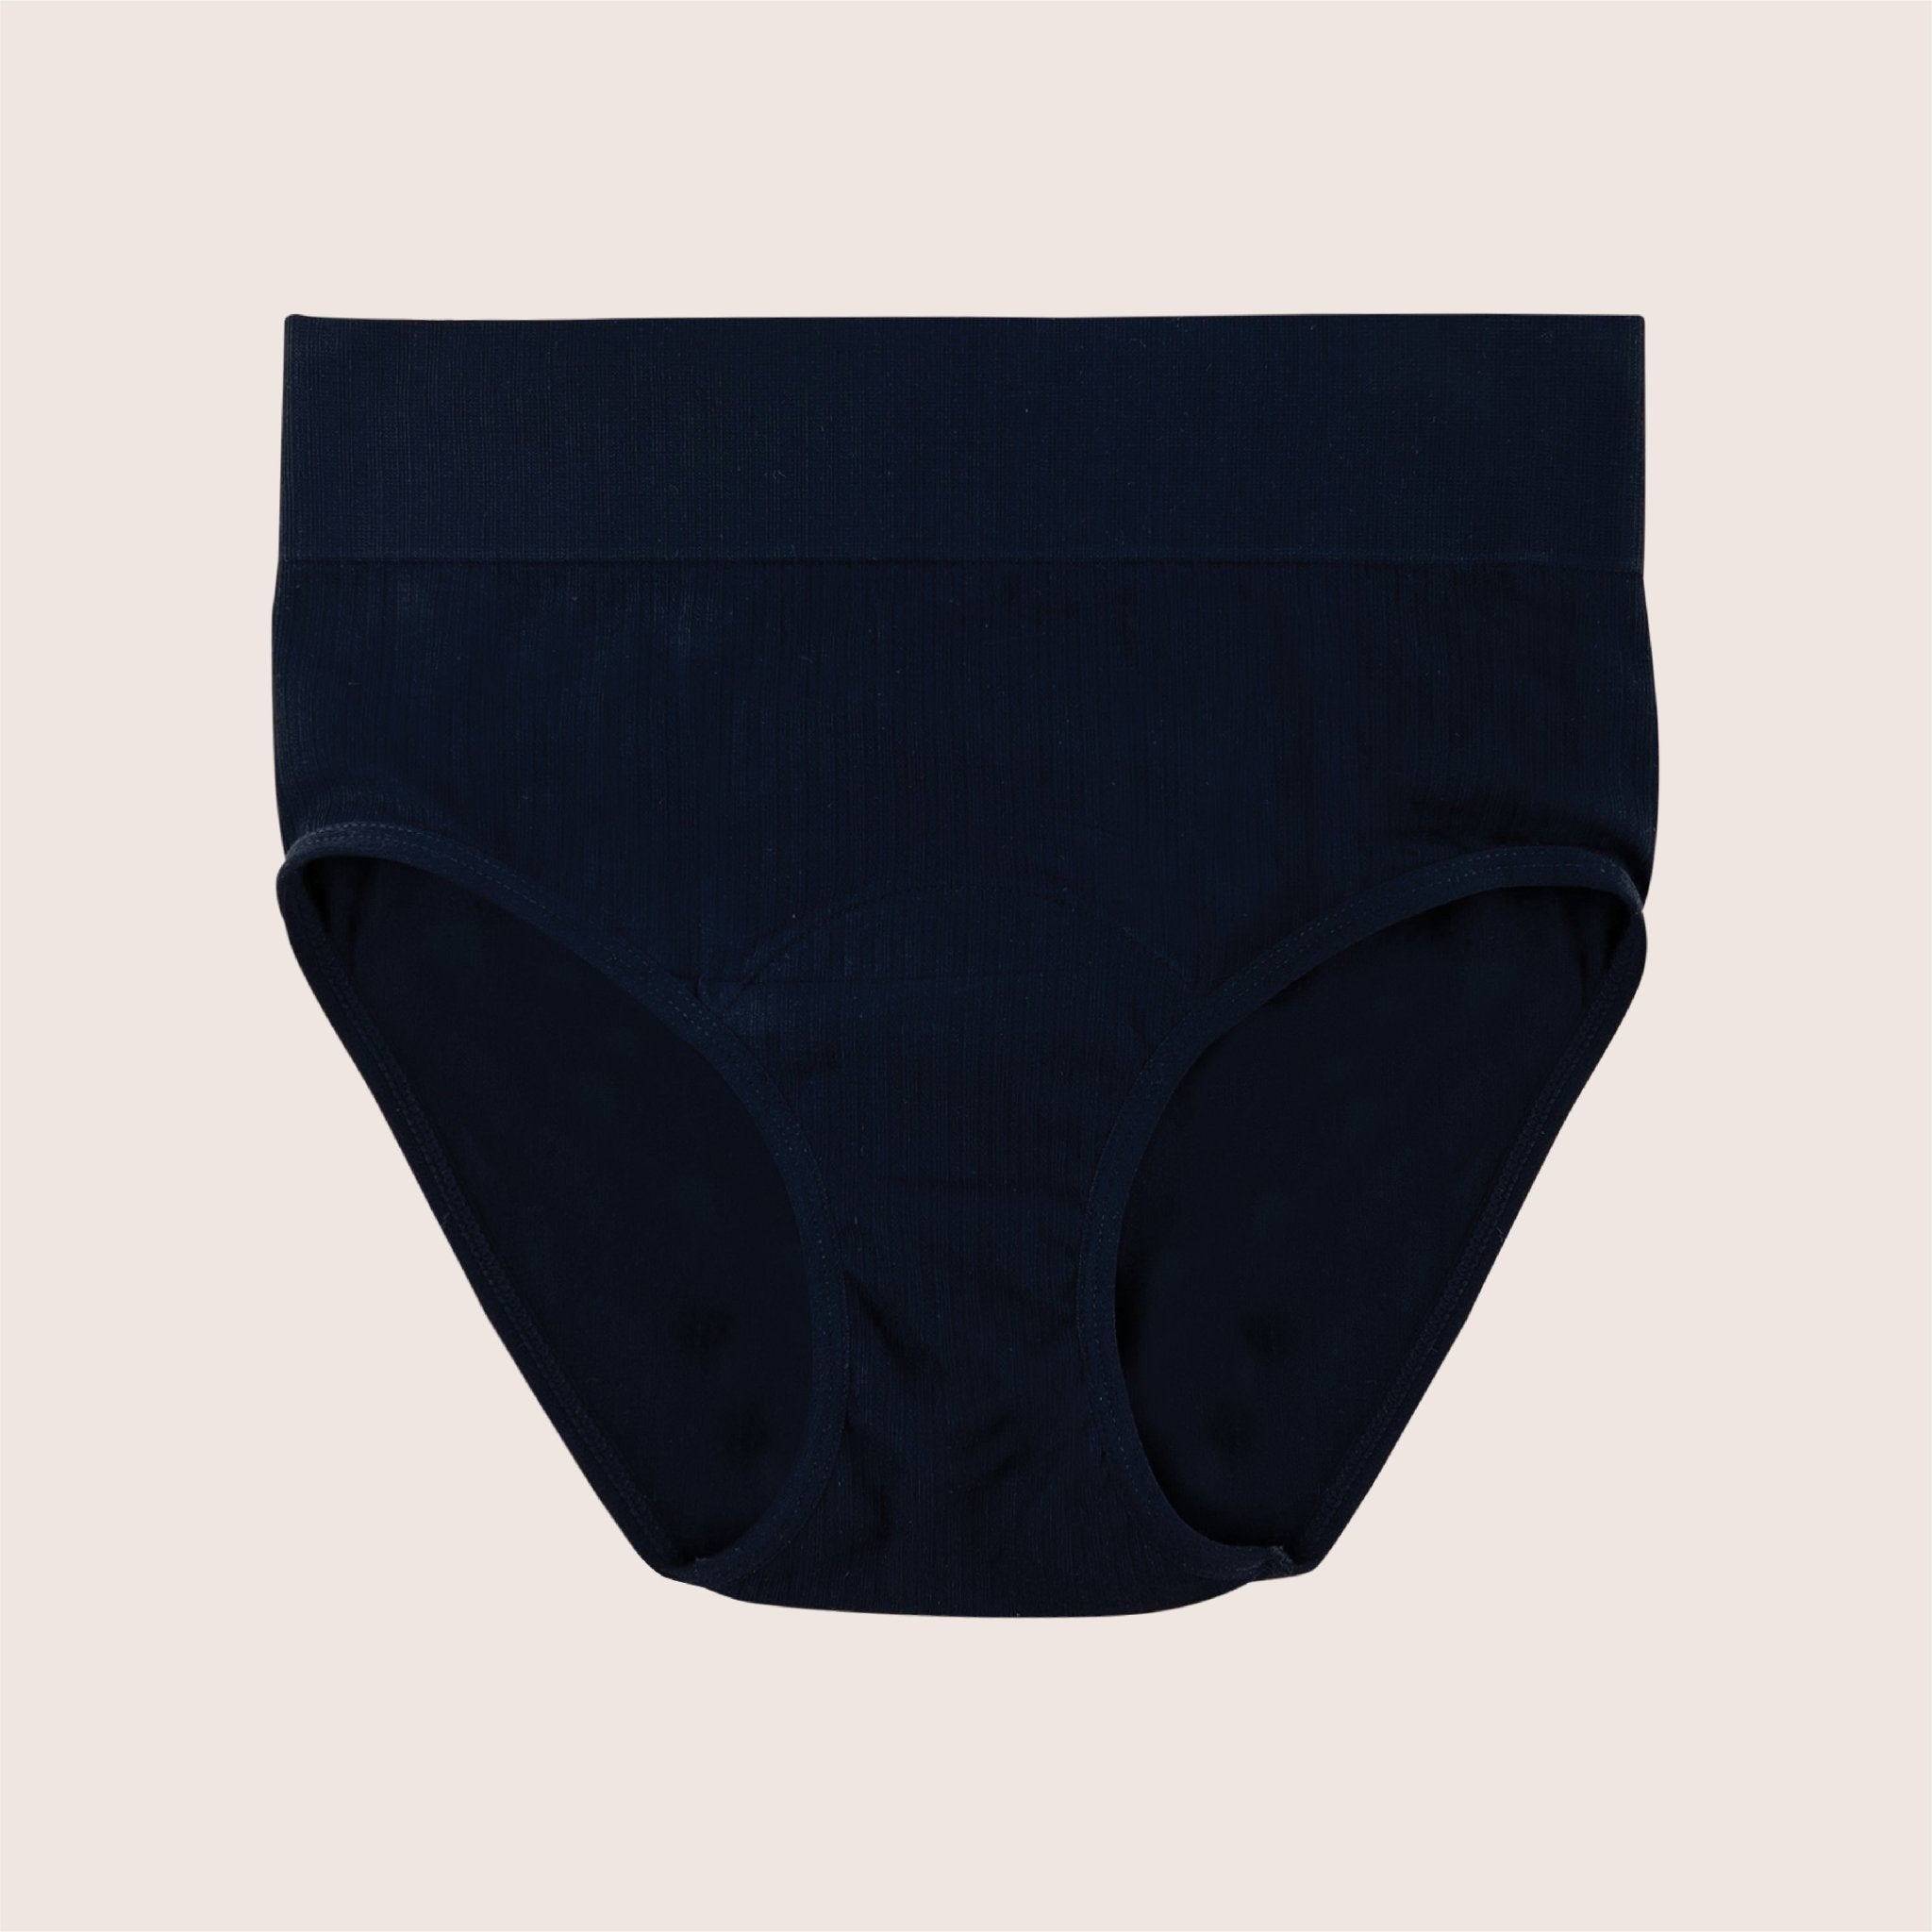 Postpartum and Menstrual Leak Protection Underwear, Period Panties